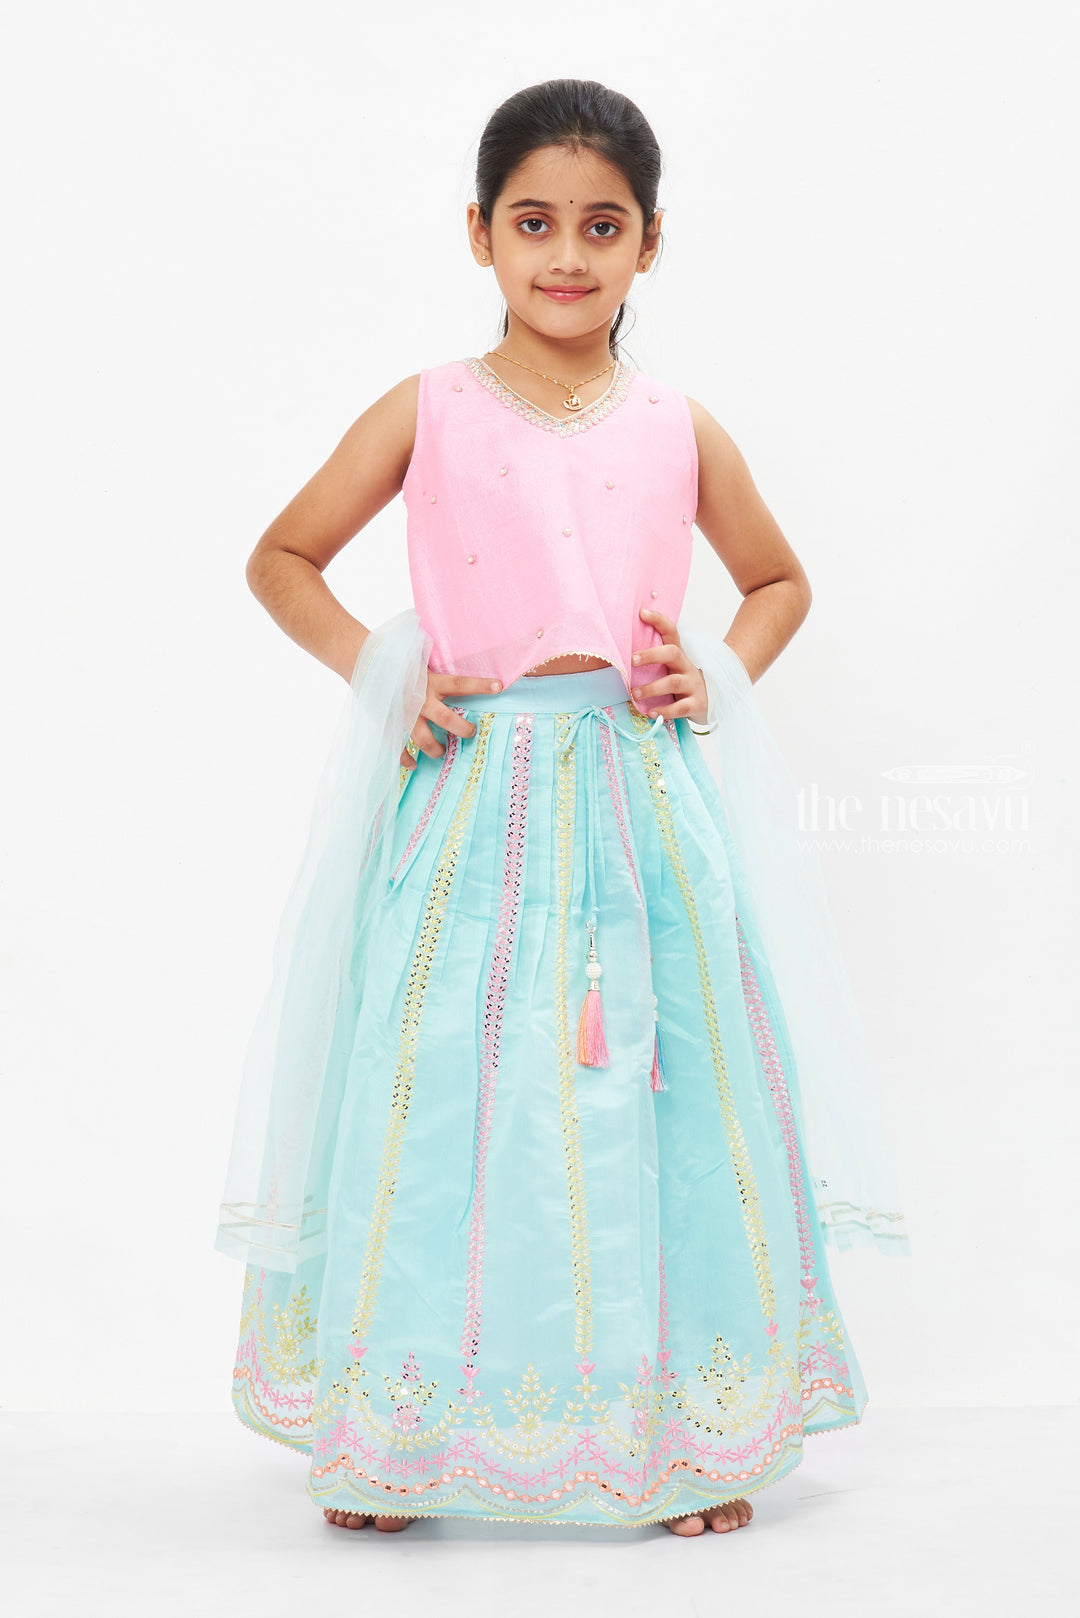 The Nesavu Girls Lehenga Choli Charming Pink and Blue Lehenga Choli for Girls- Ethnic Kids Wear Nesavu 16 (1Y) / Blue / Chanderi GL430A-16 Pink Blouse & Blue Lehenga Choli Set | Traditional Festive Outfit for Girls | The Nesavu